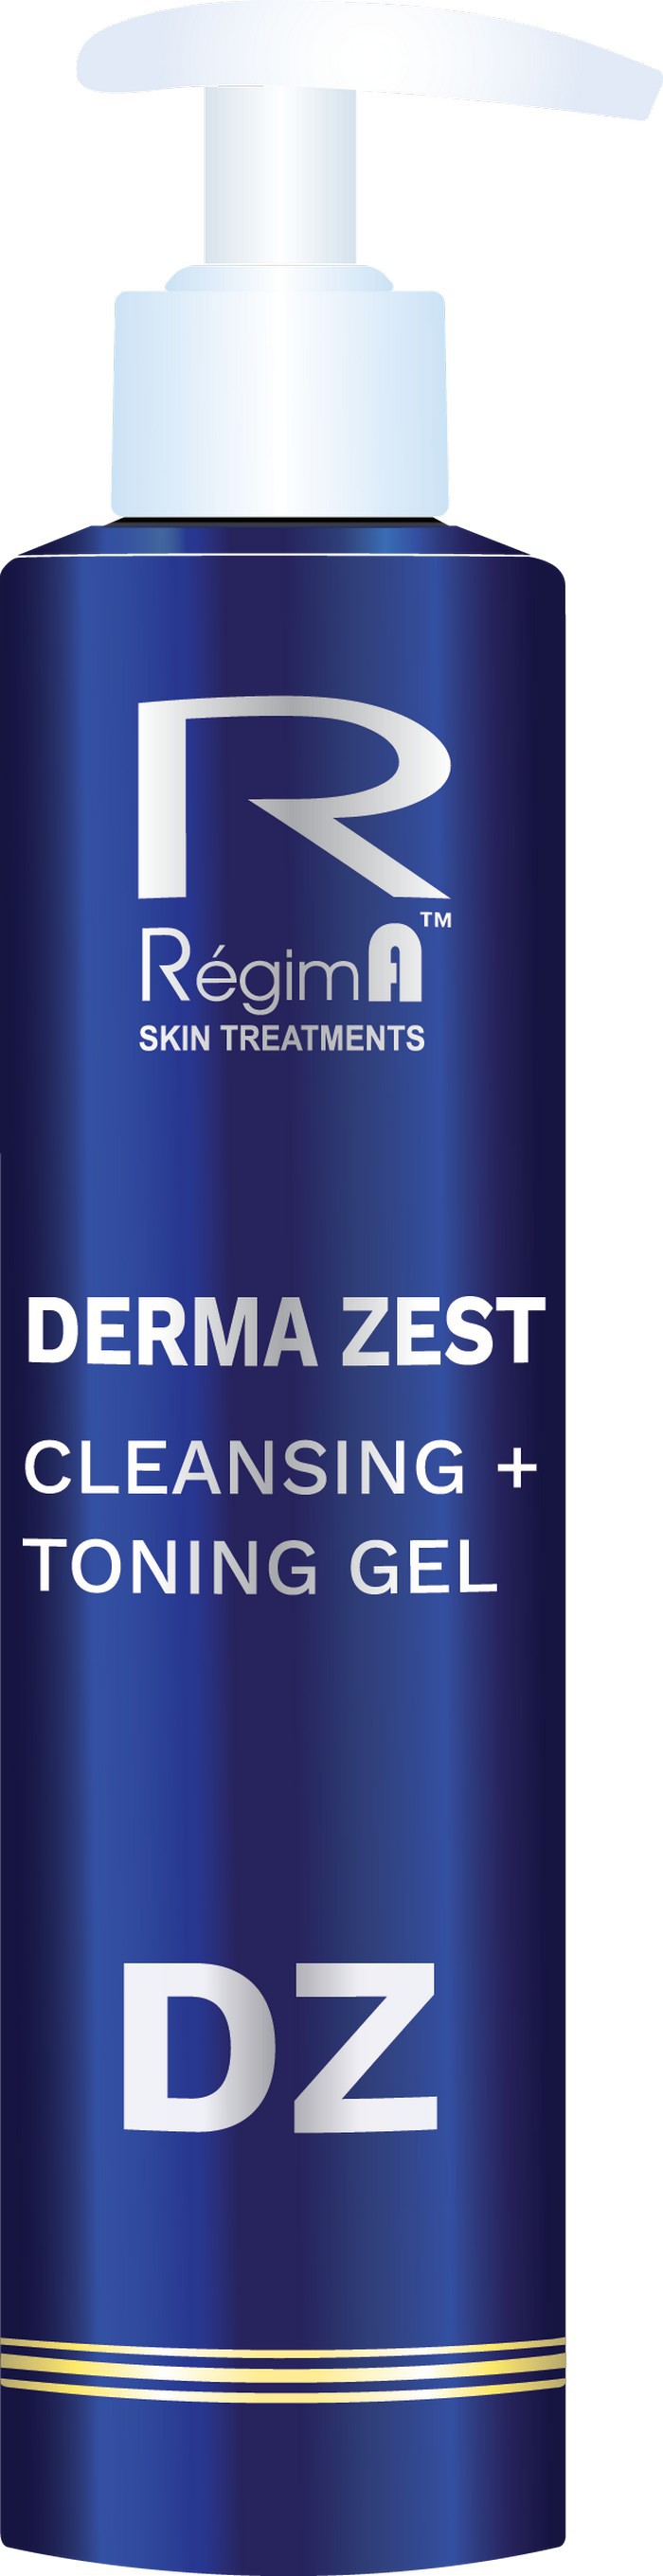 Derma Zest Cleansing + Toning Gel